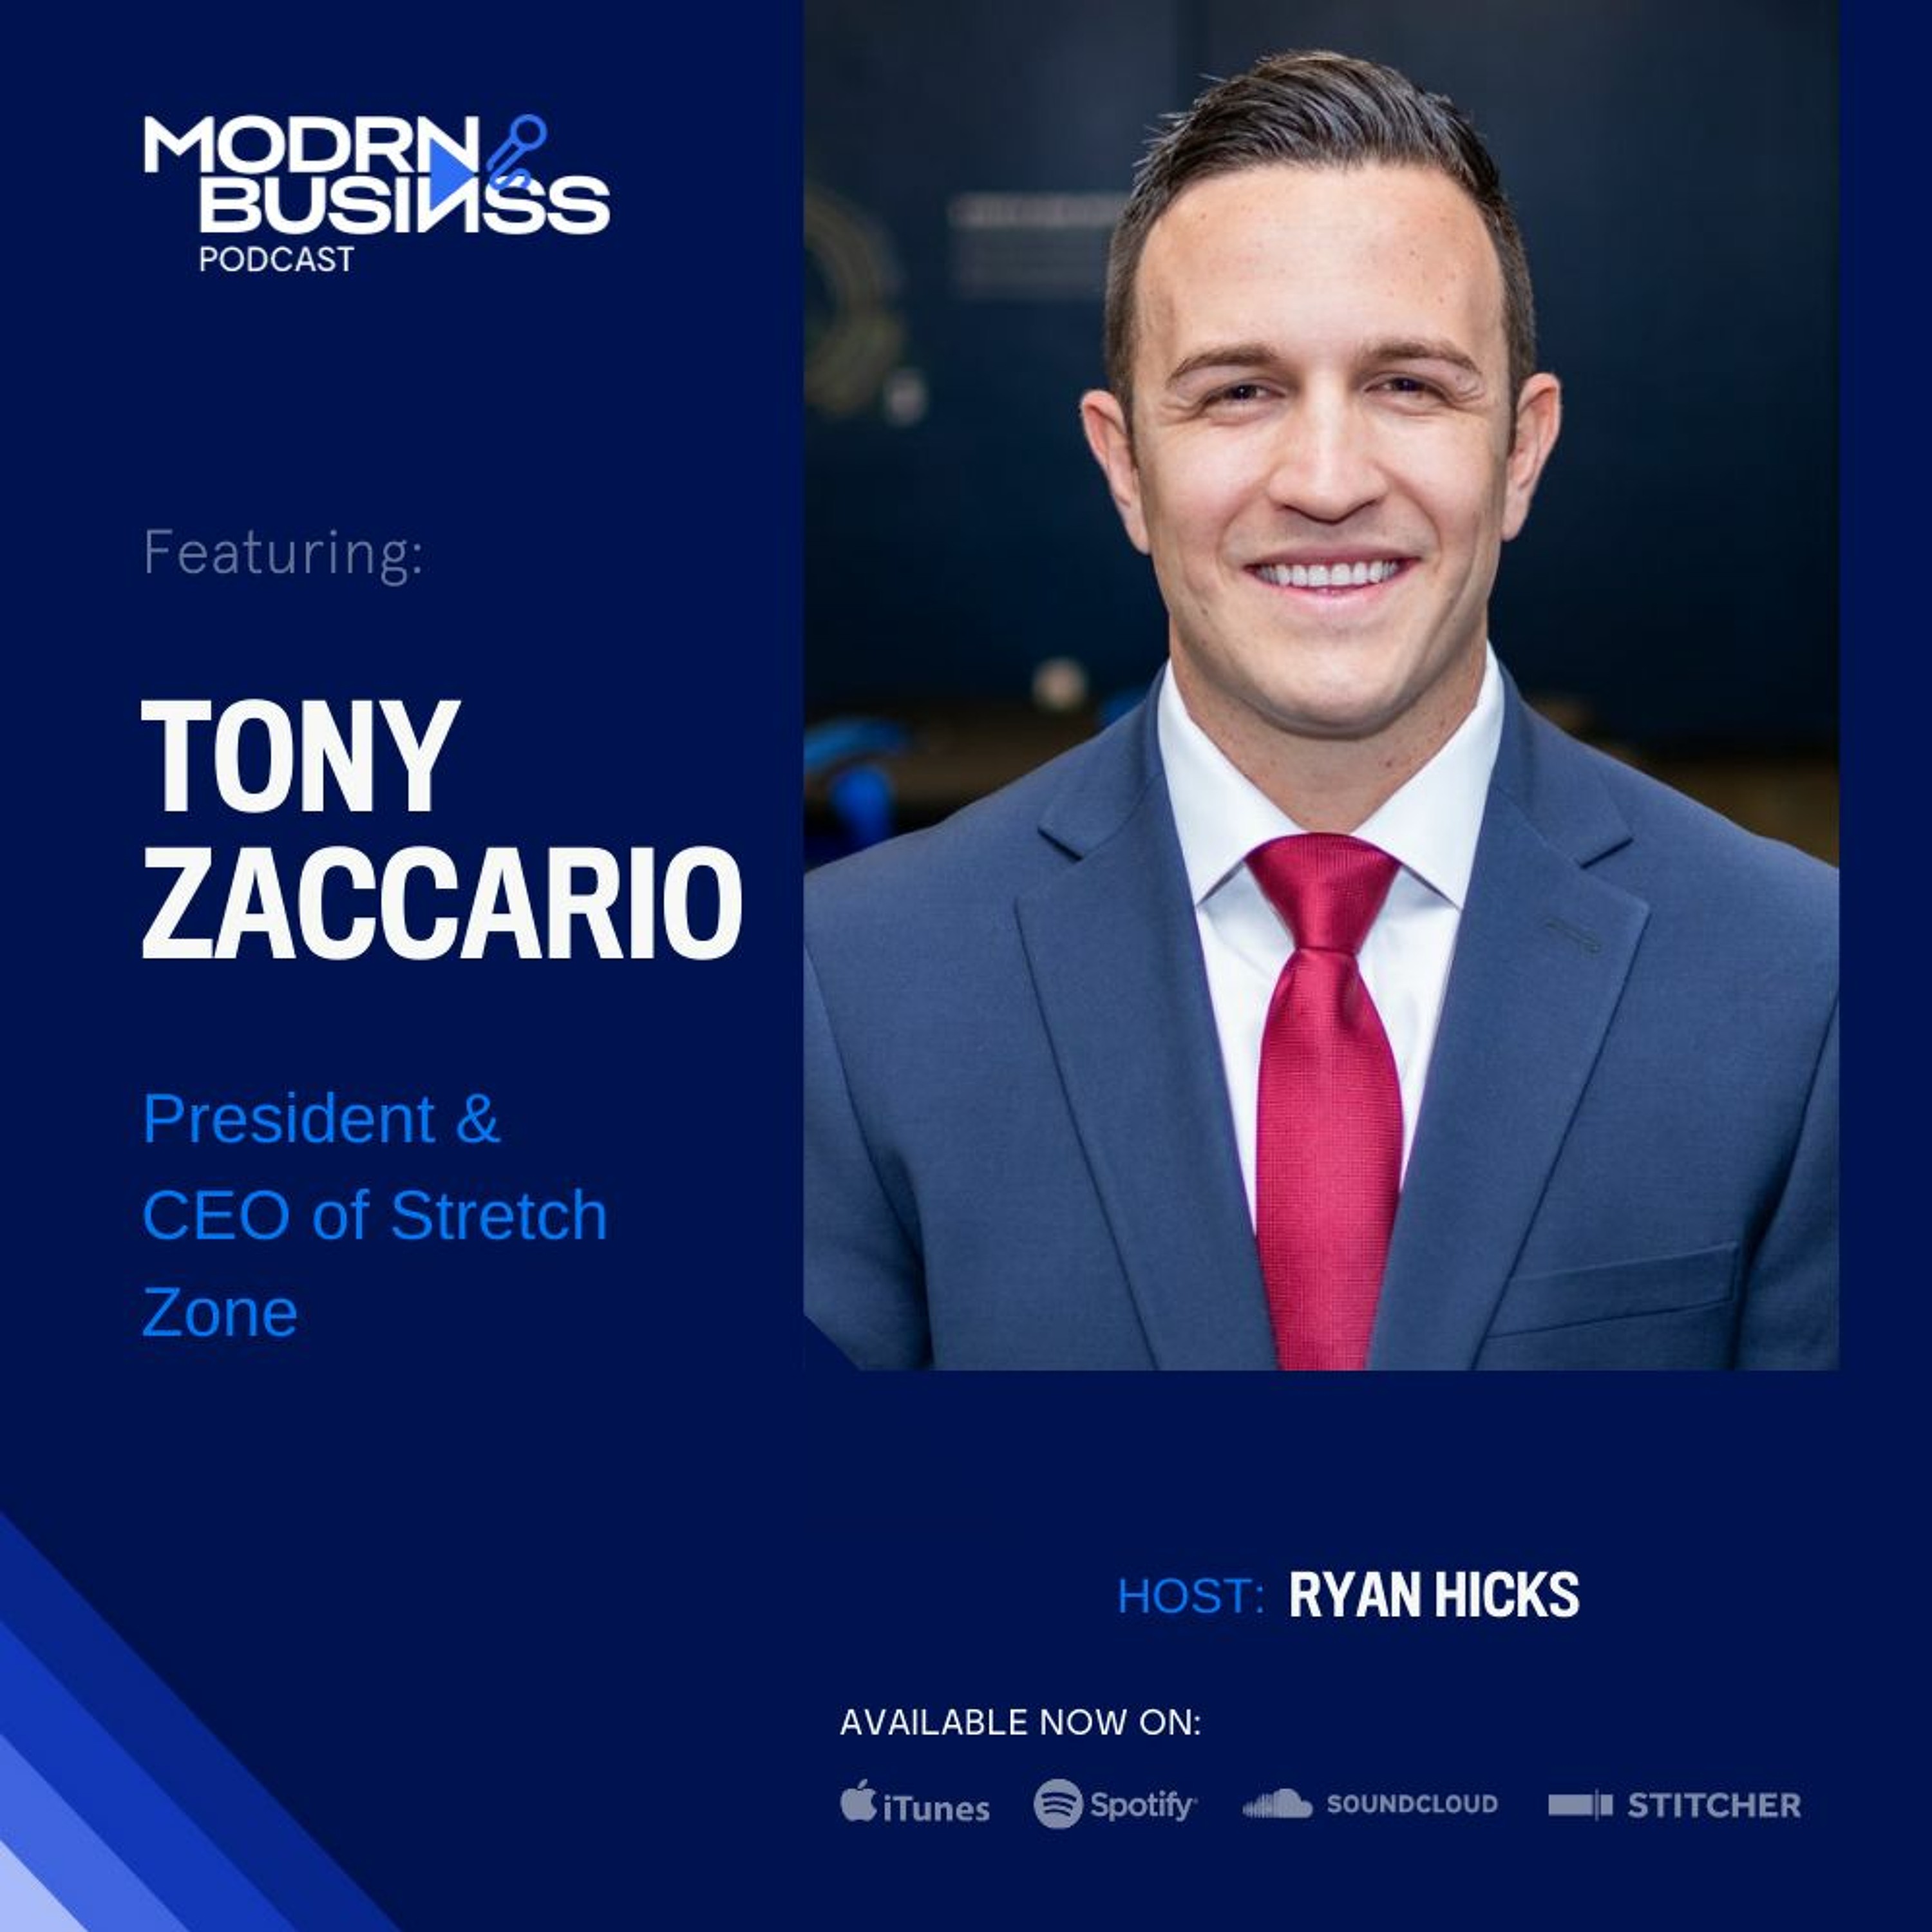 Tony Zaccario, President of Stretch Zone